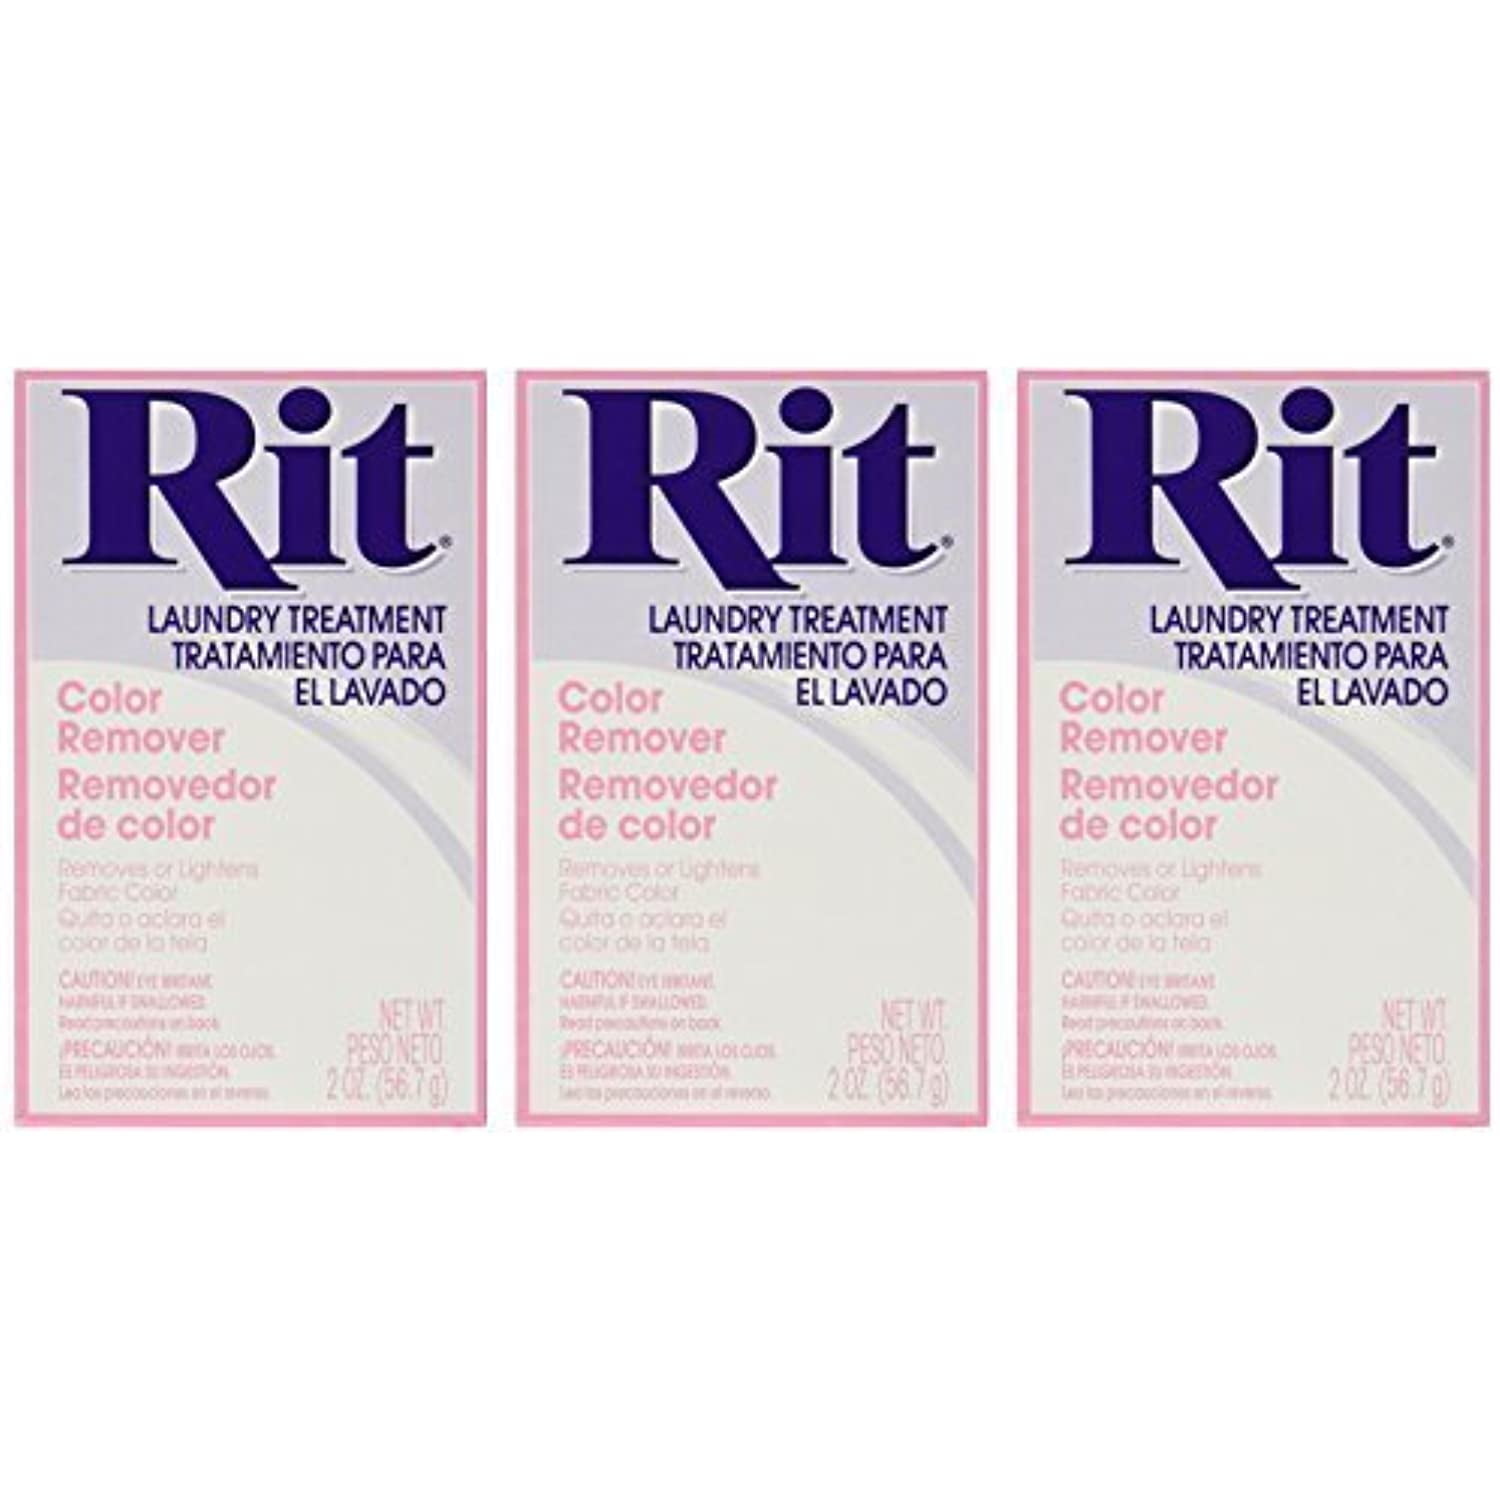 Rit Dye Laundry Treatment Color Remover Powder, 2 oz, 3-Pack by Rit Dye 